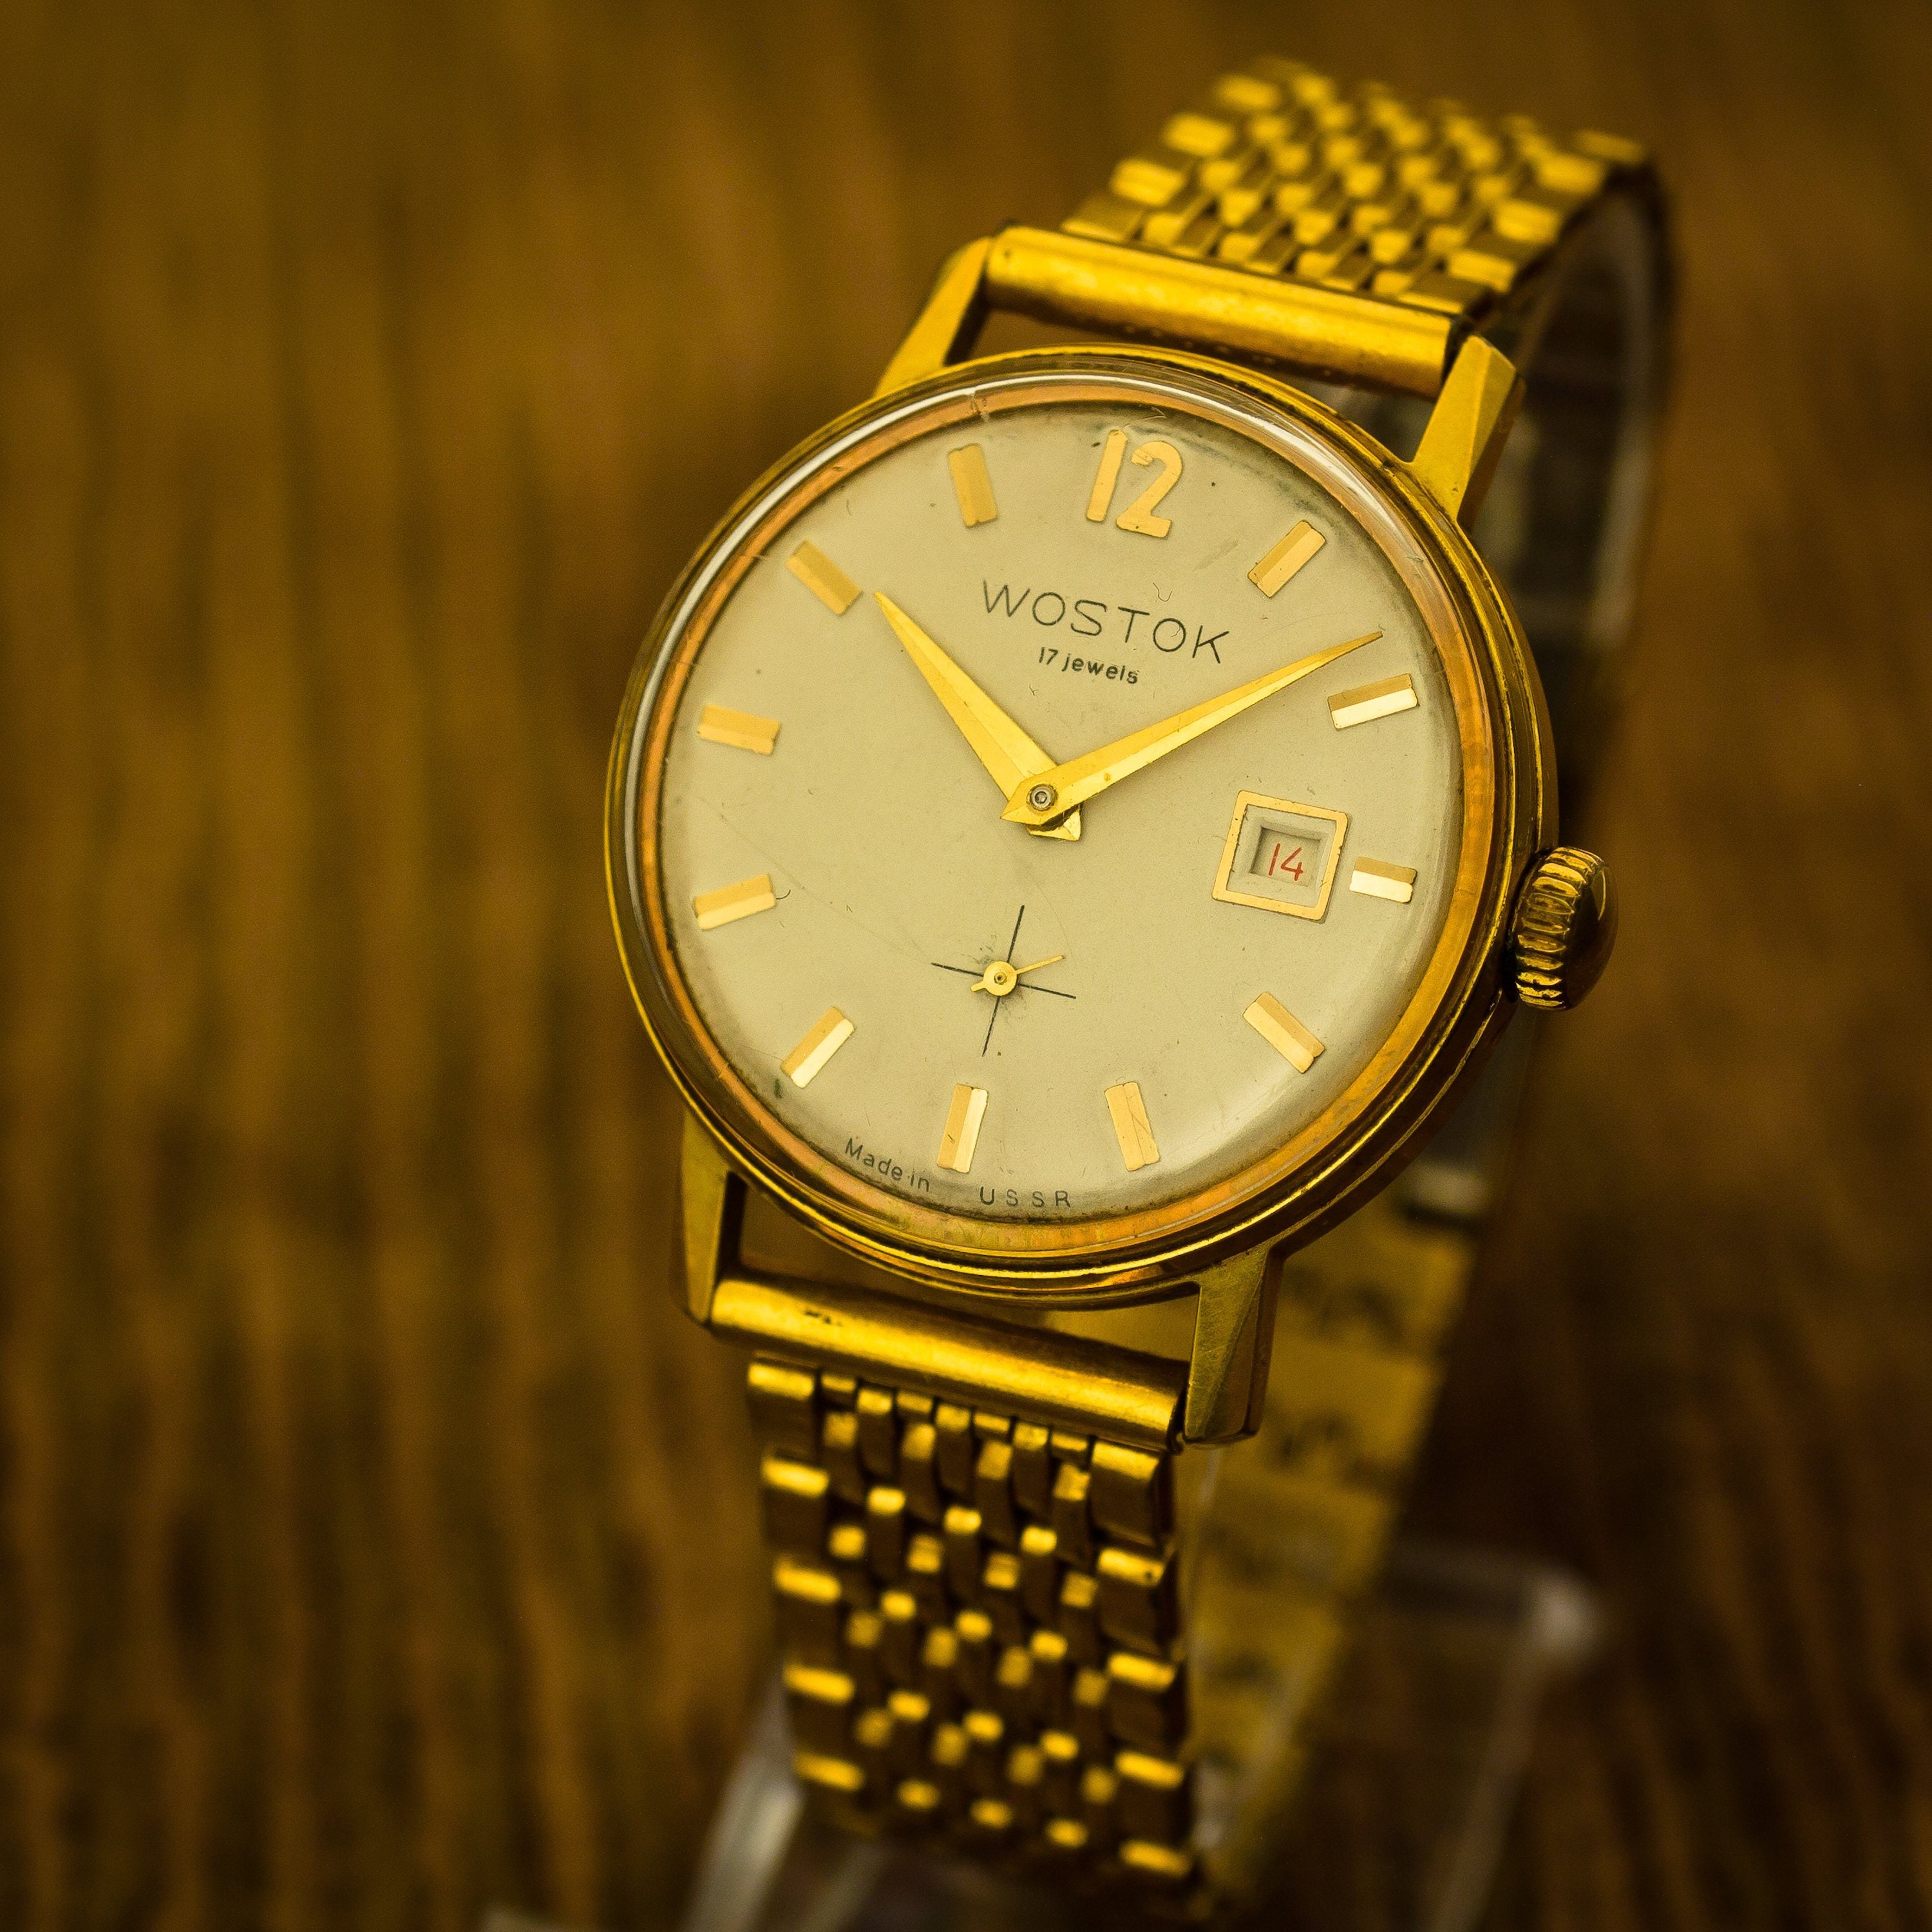 VOSTOK WOSTOK soviet vintage watch mechanical Gold Plated | Etsy